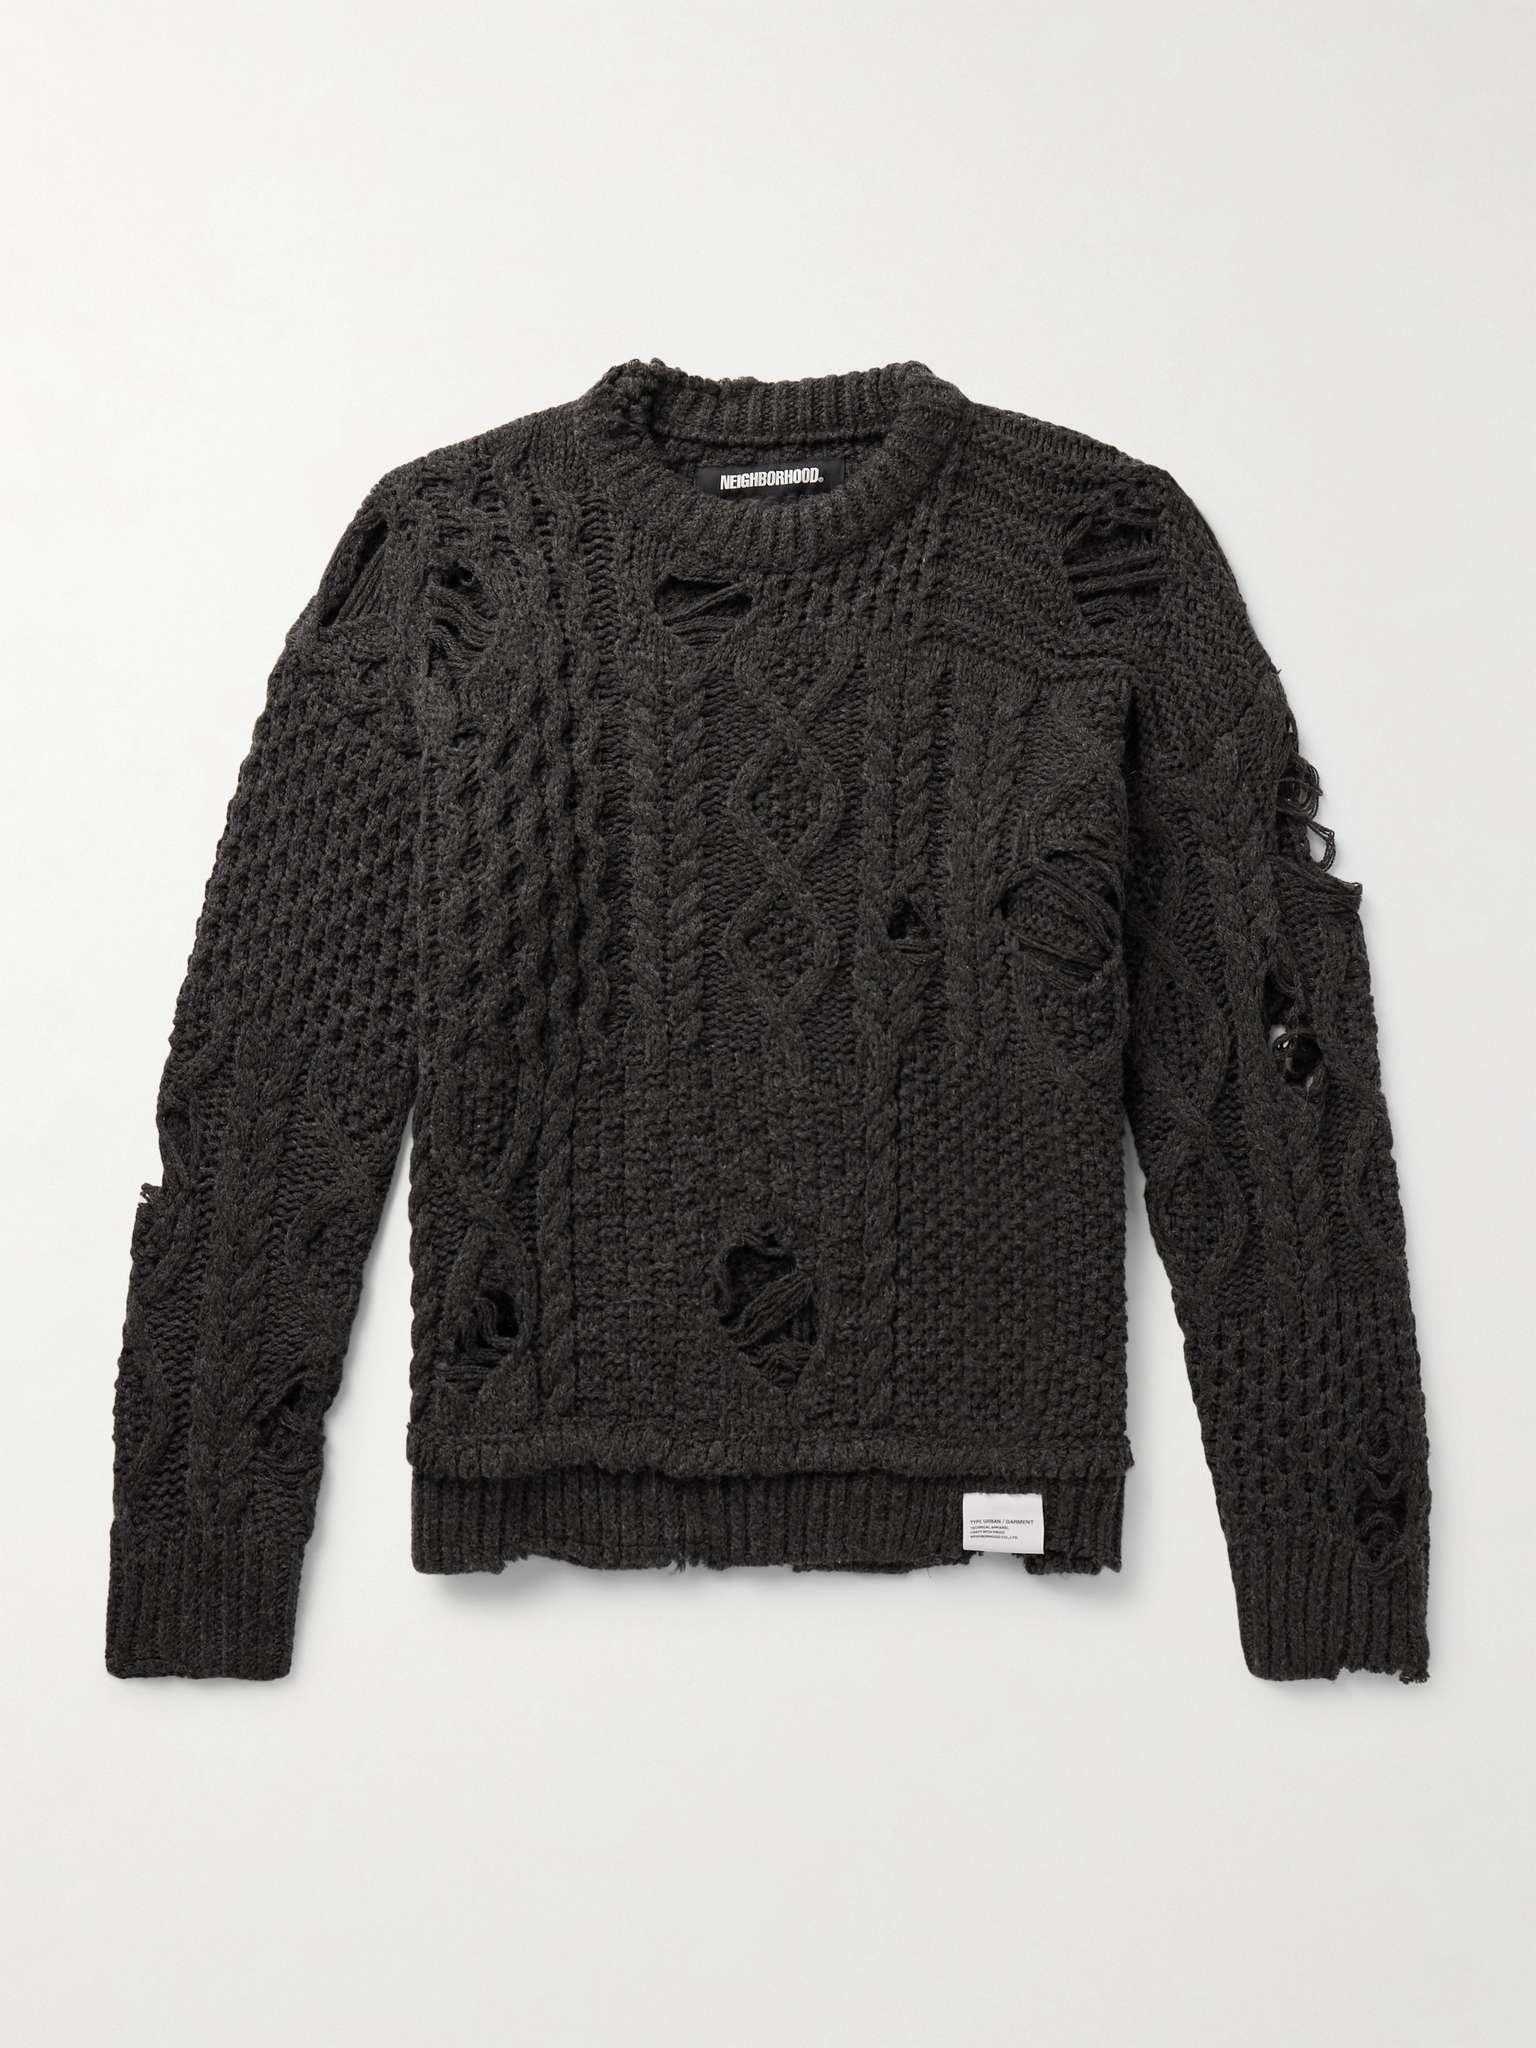 NEIGHBORHOOD Savage Distressed Knitted Sweater | REVERSIBLE